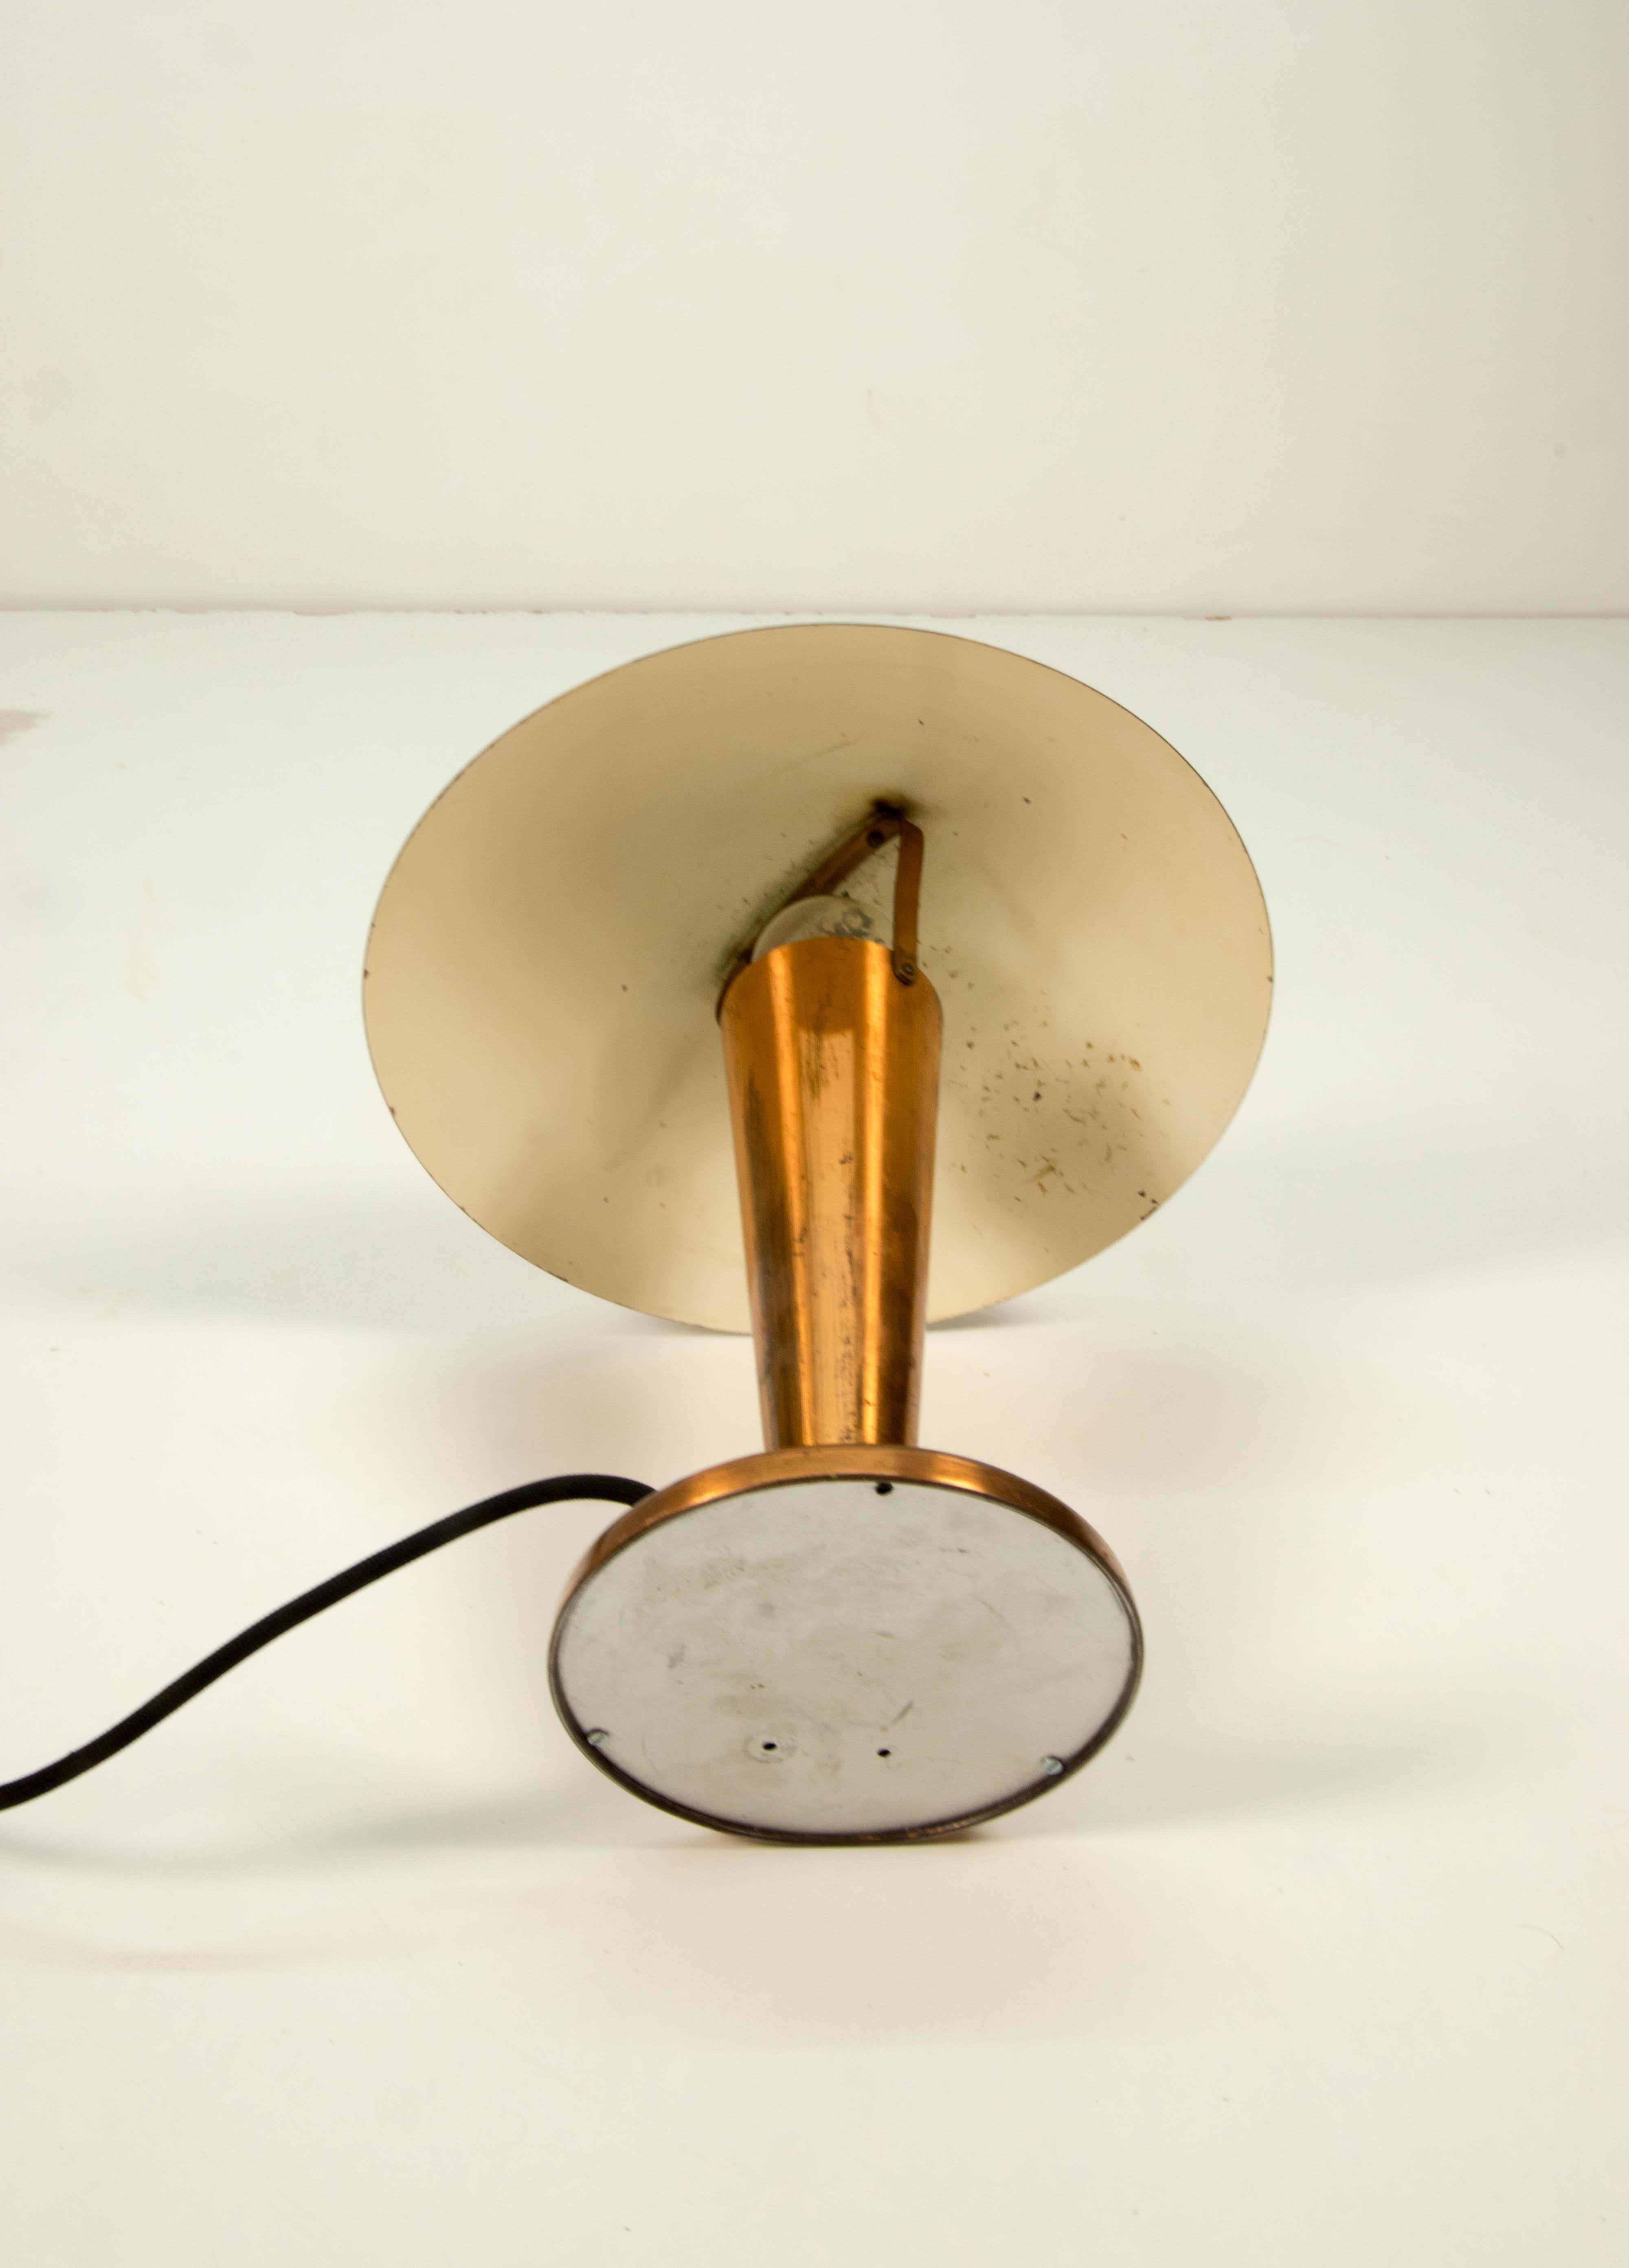 Metal Bauhaus Table Lamp with Flexible Shade, 1930s